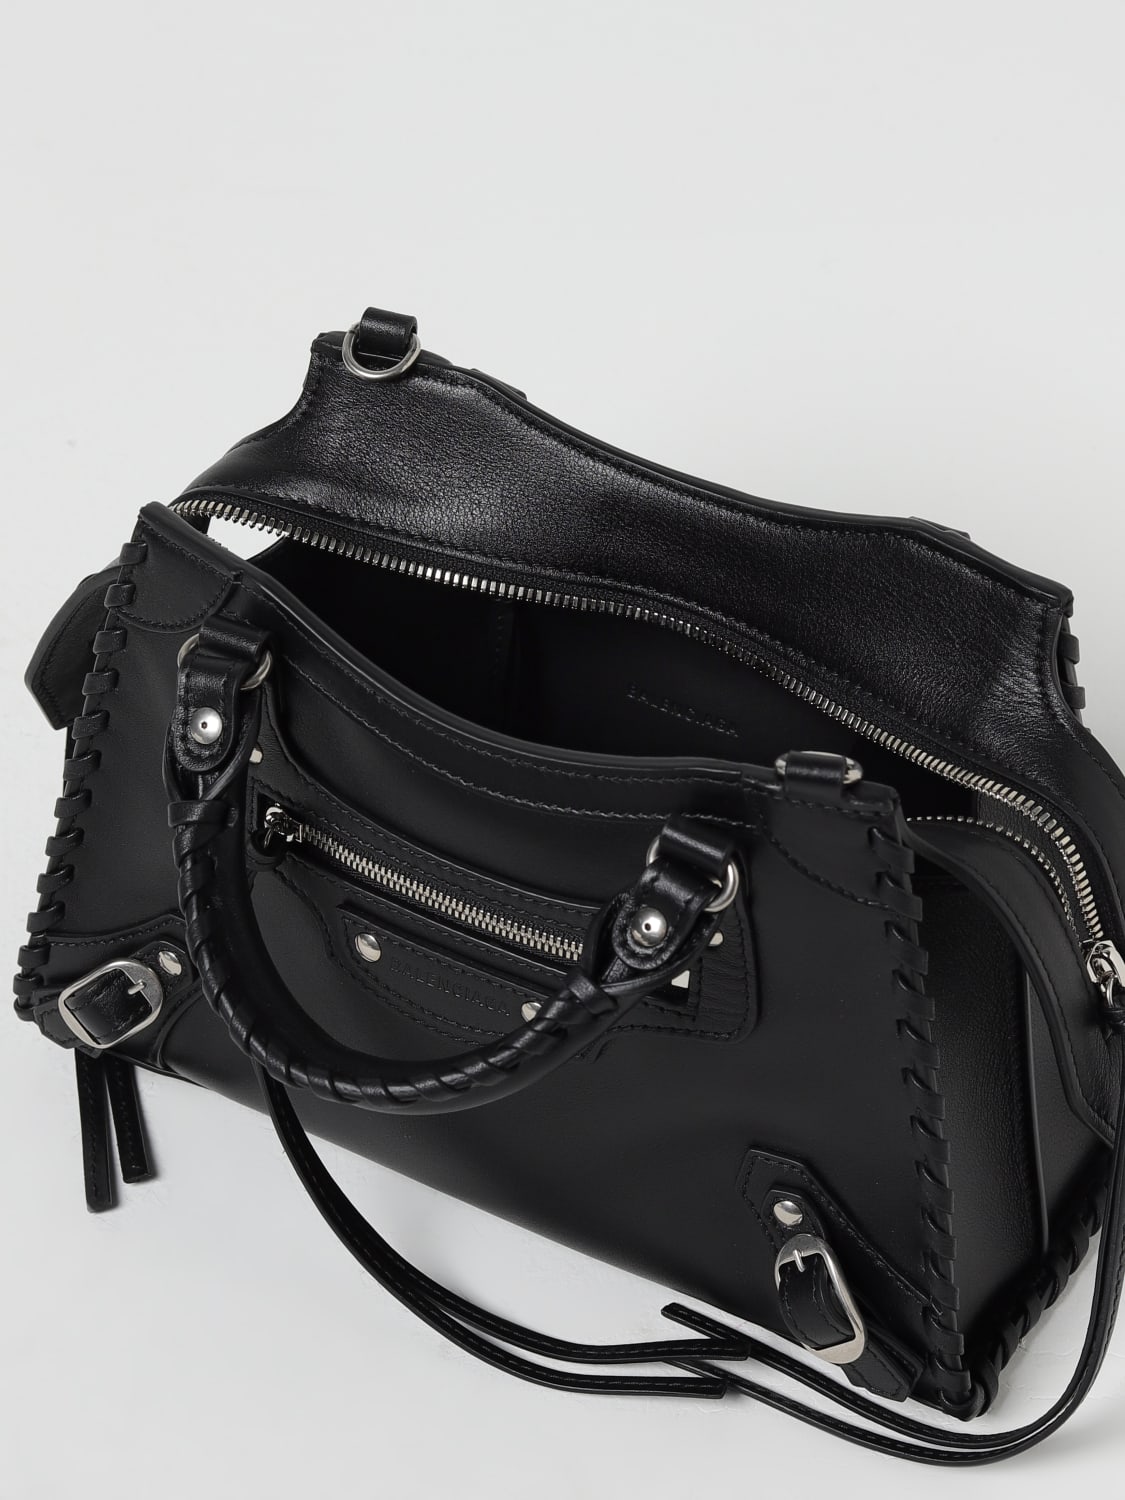 Balenciaga Classic City Mini Leather Bag in Black